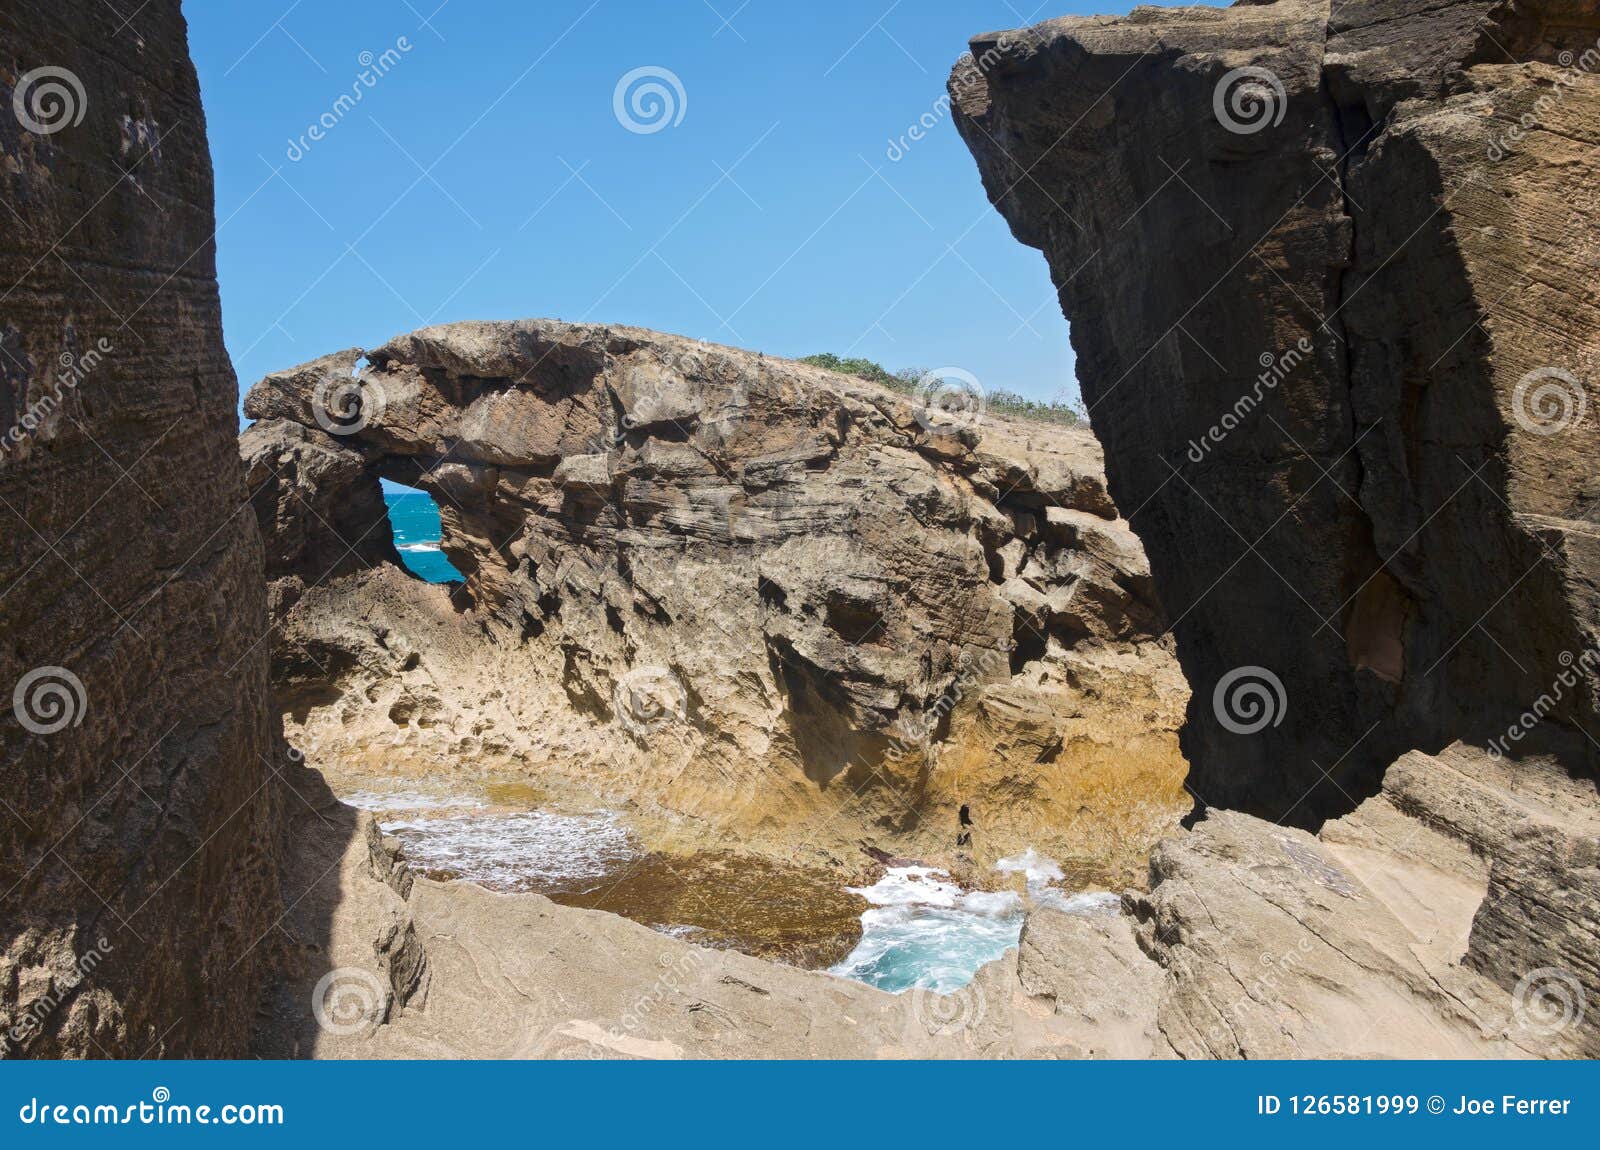 rock walls and formations of cueva del indio